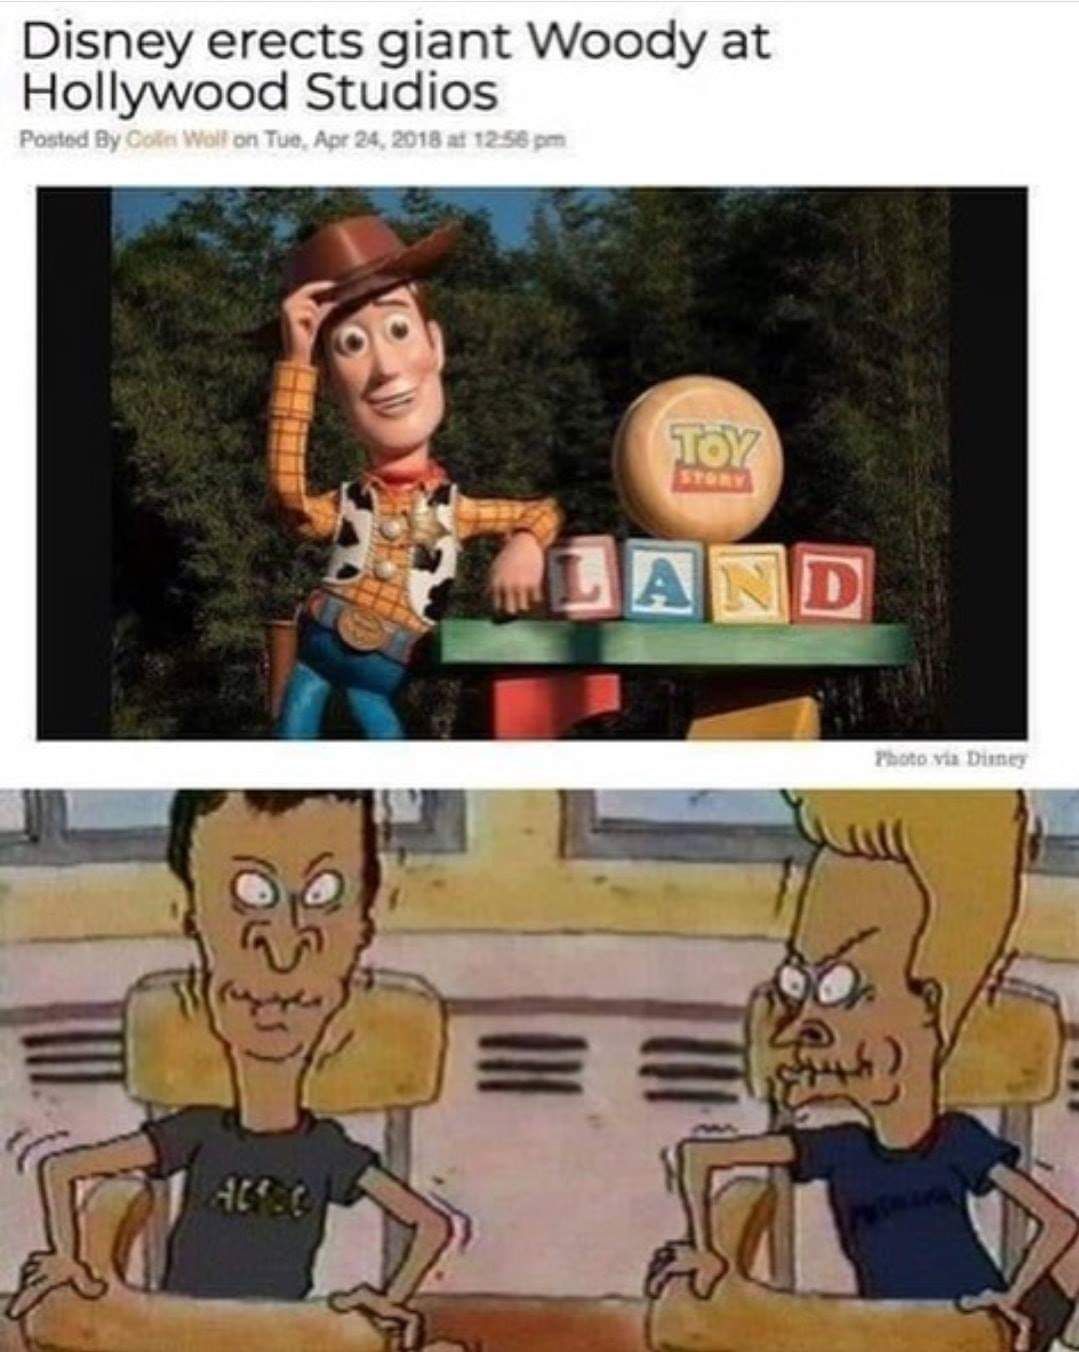 He said Woody